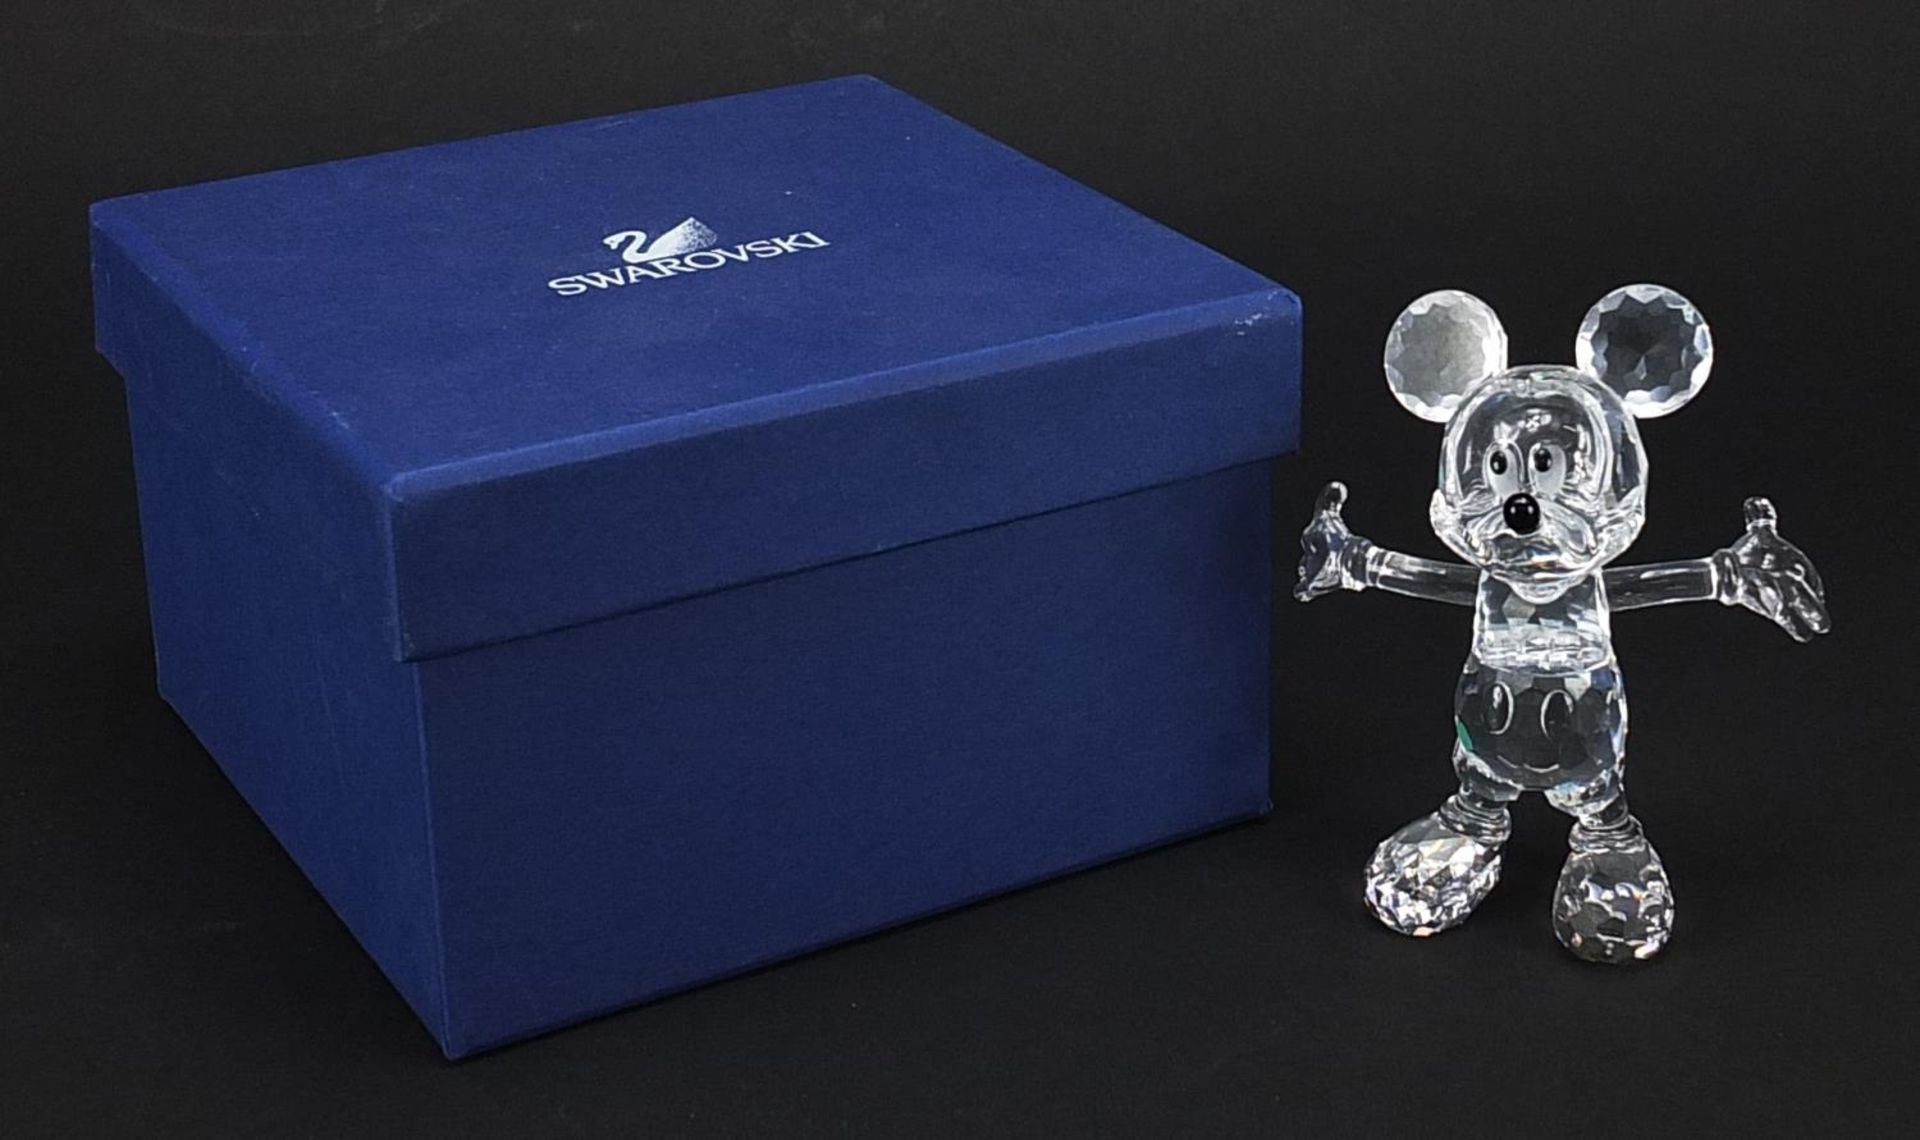 Swarovski Crystal Mickey Mouse Disney figure with box, 10cm high